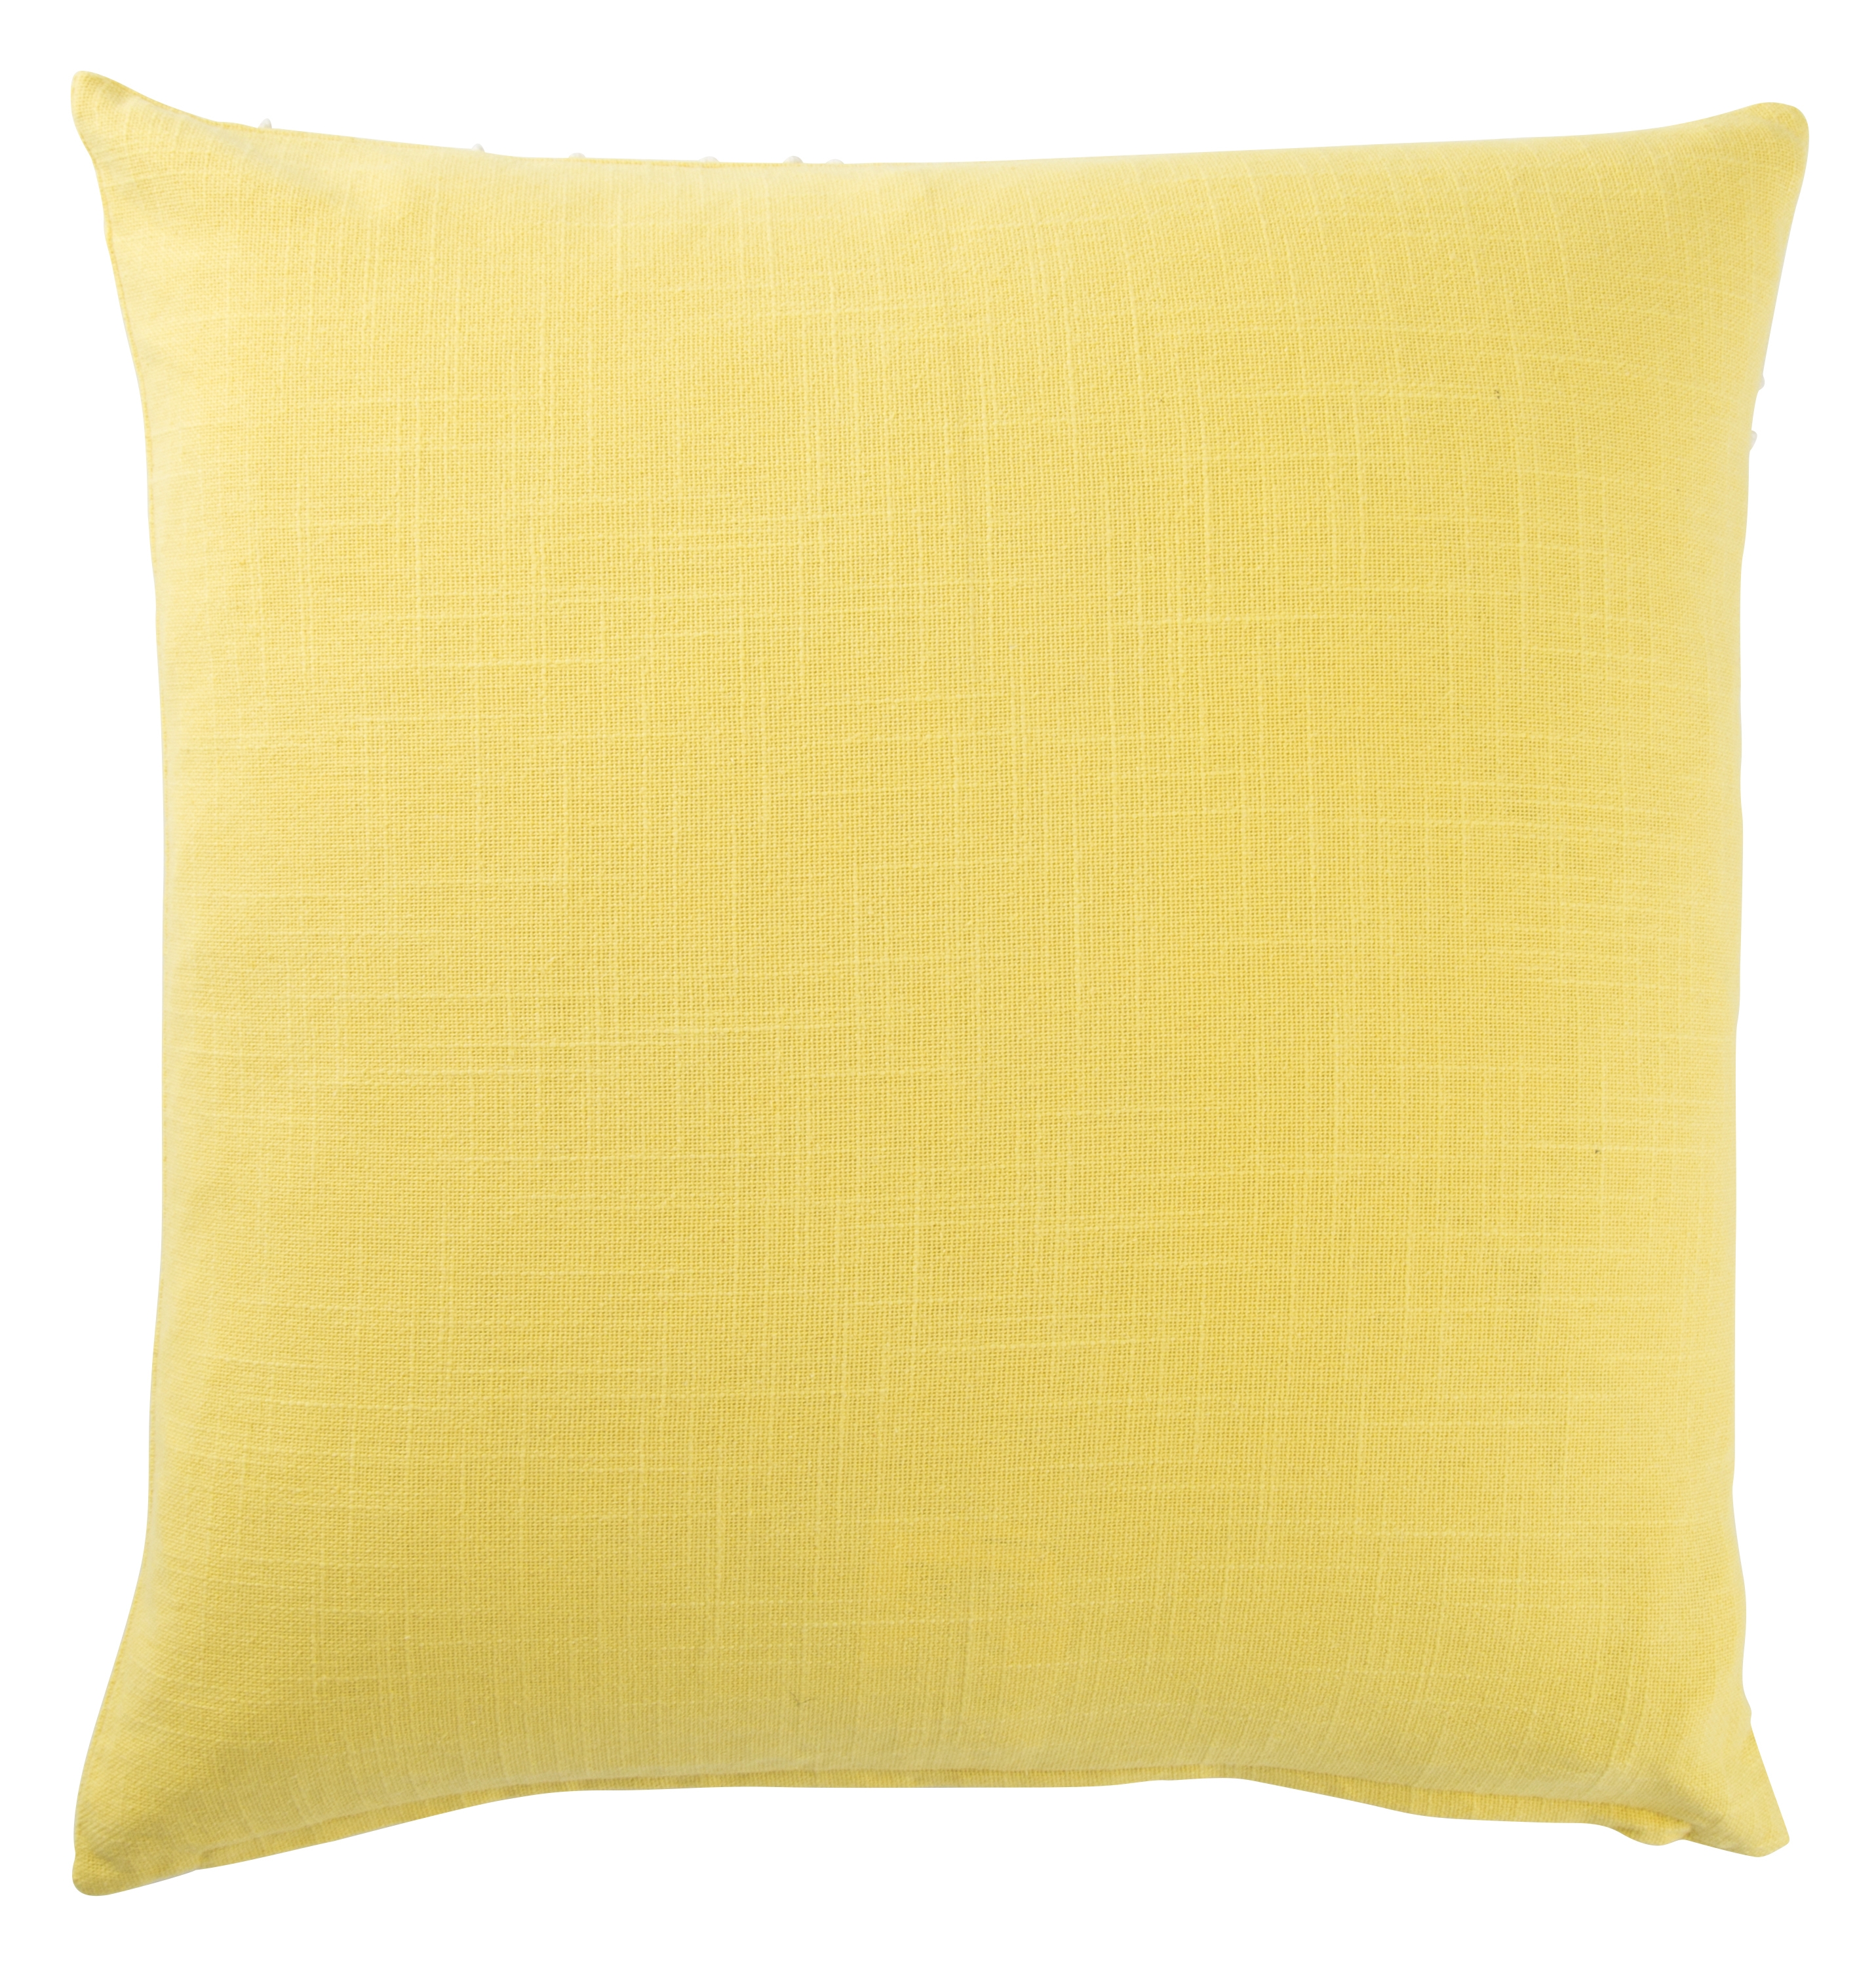 Design (US) Yellow 18"X18" Pillow - Image 1